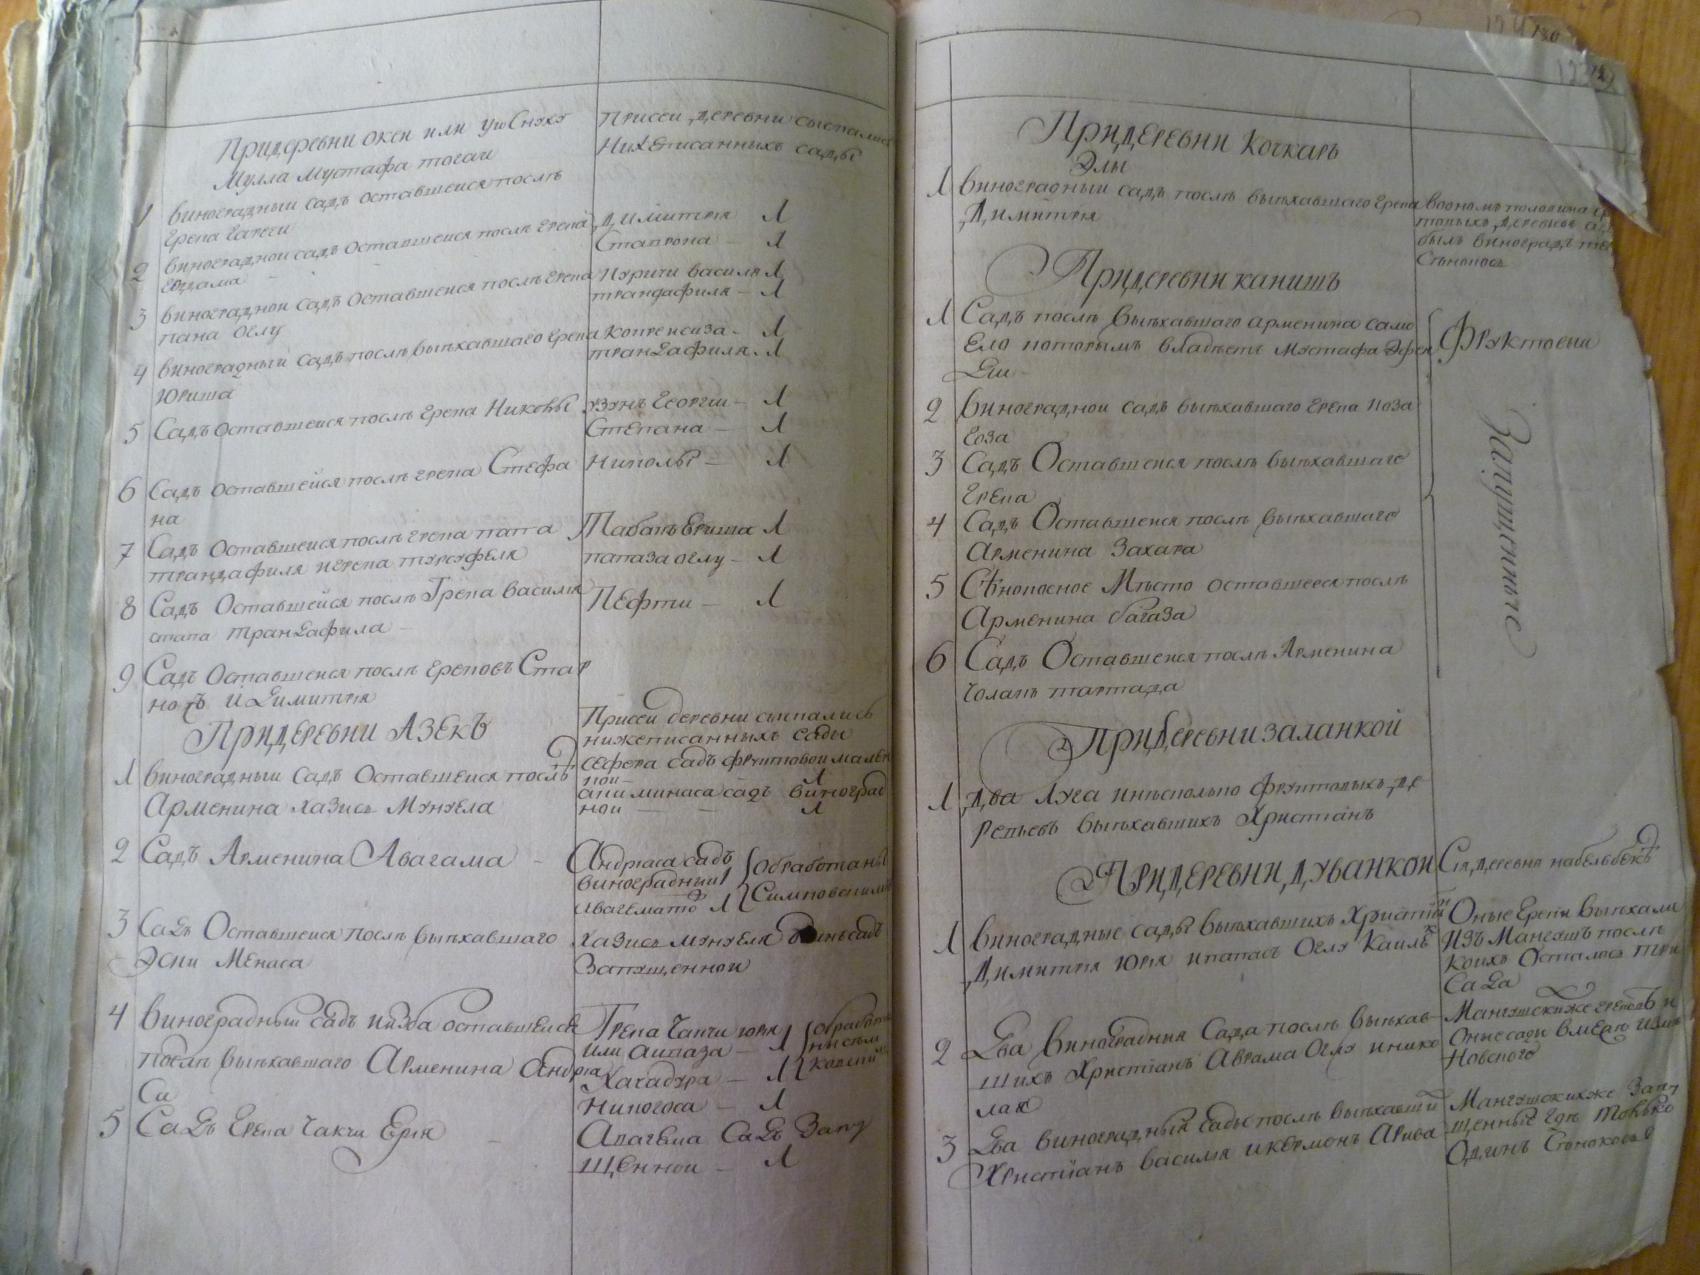 manuscript pages arranged in columns